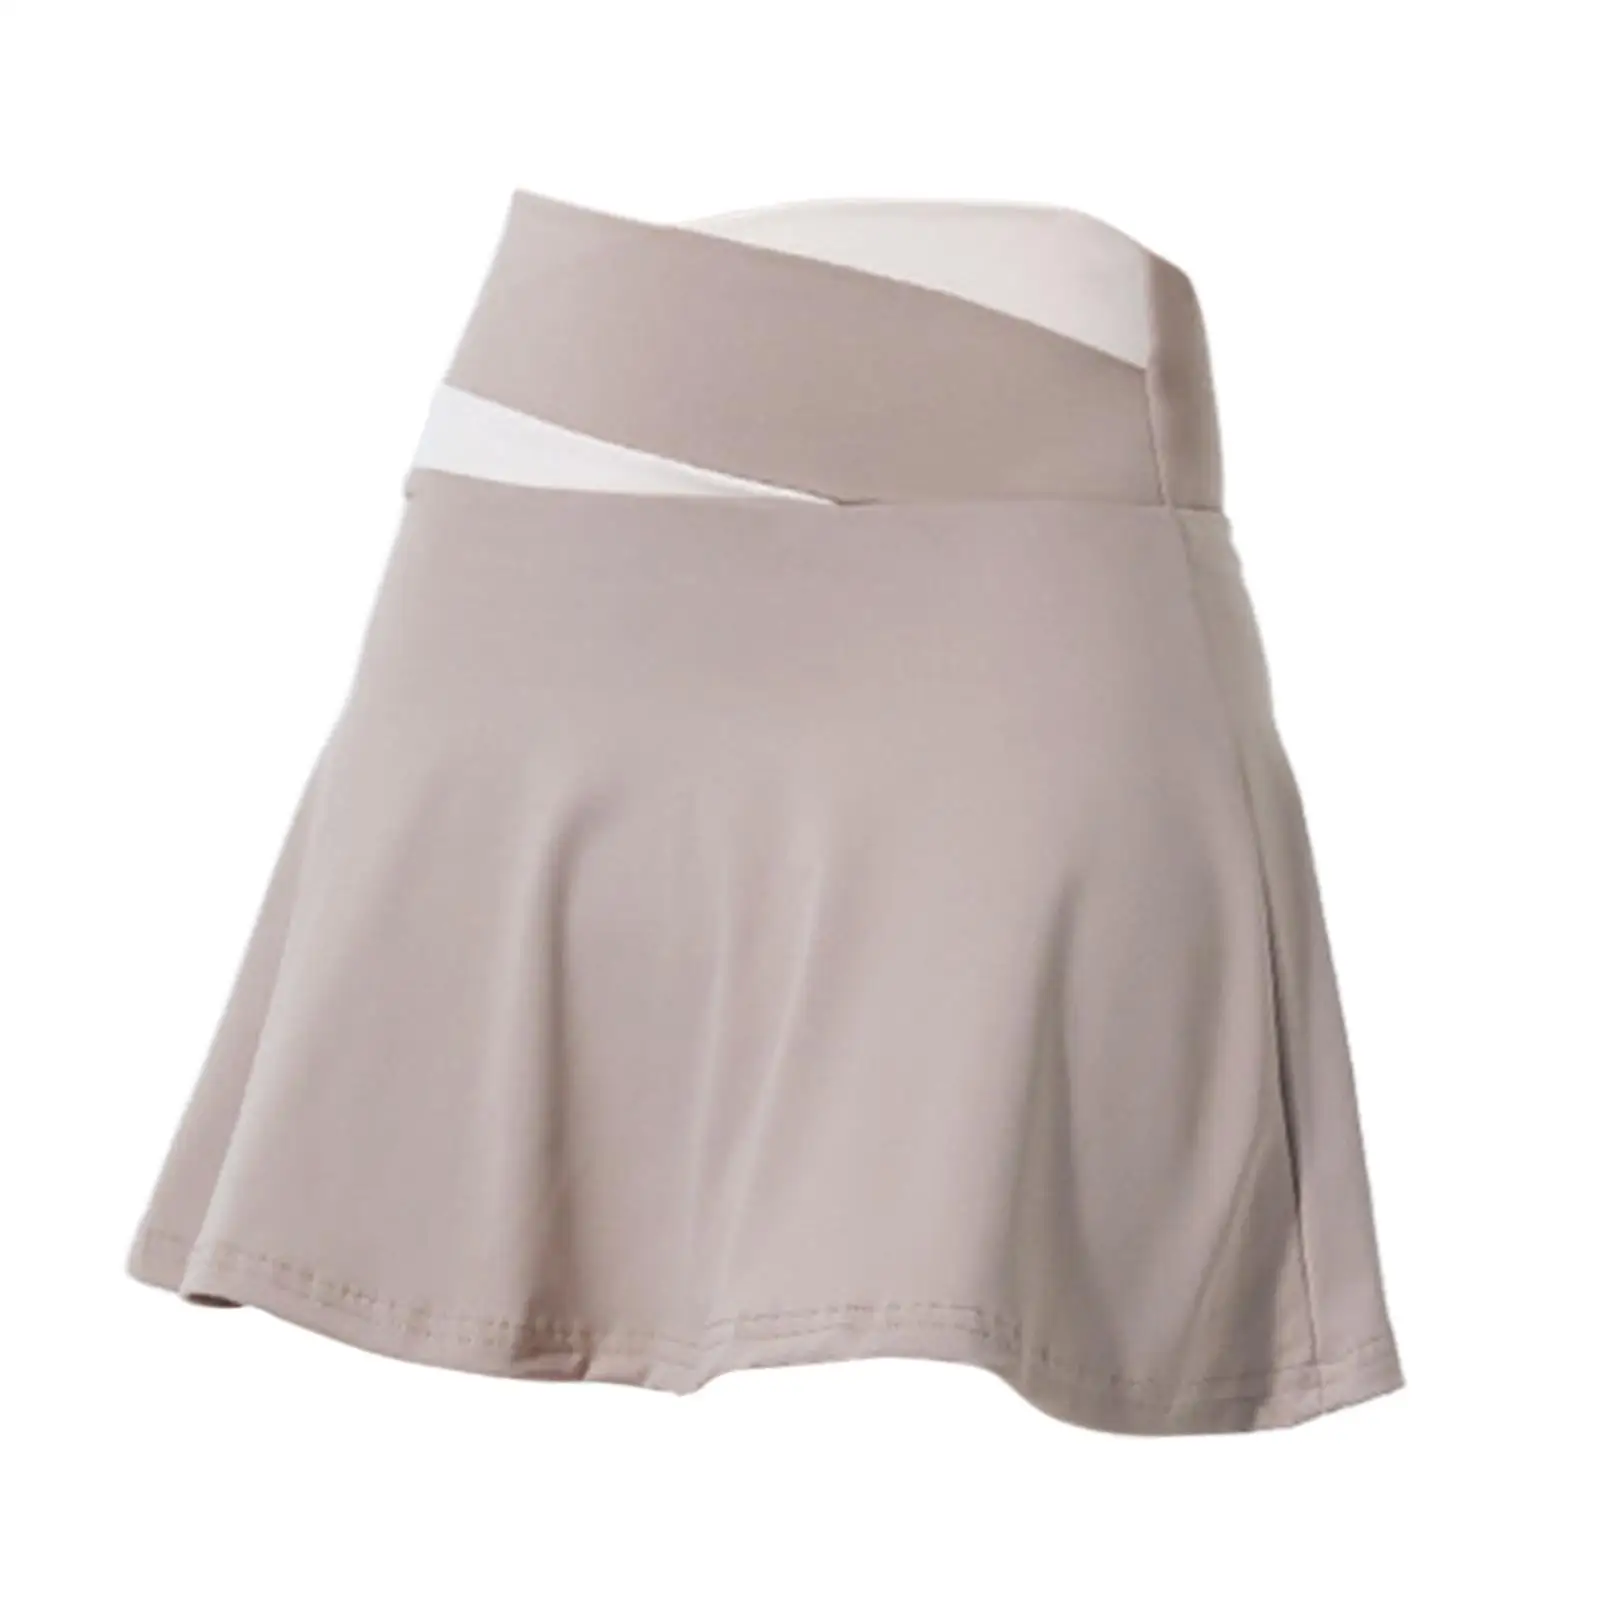 Tennis Skirts Short Skirts Anti Exposure Athletic Soft Badminton Skirts Golf Skorts Skirt for Running Yoga Tennis Fitness